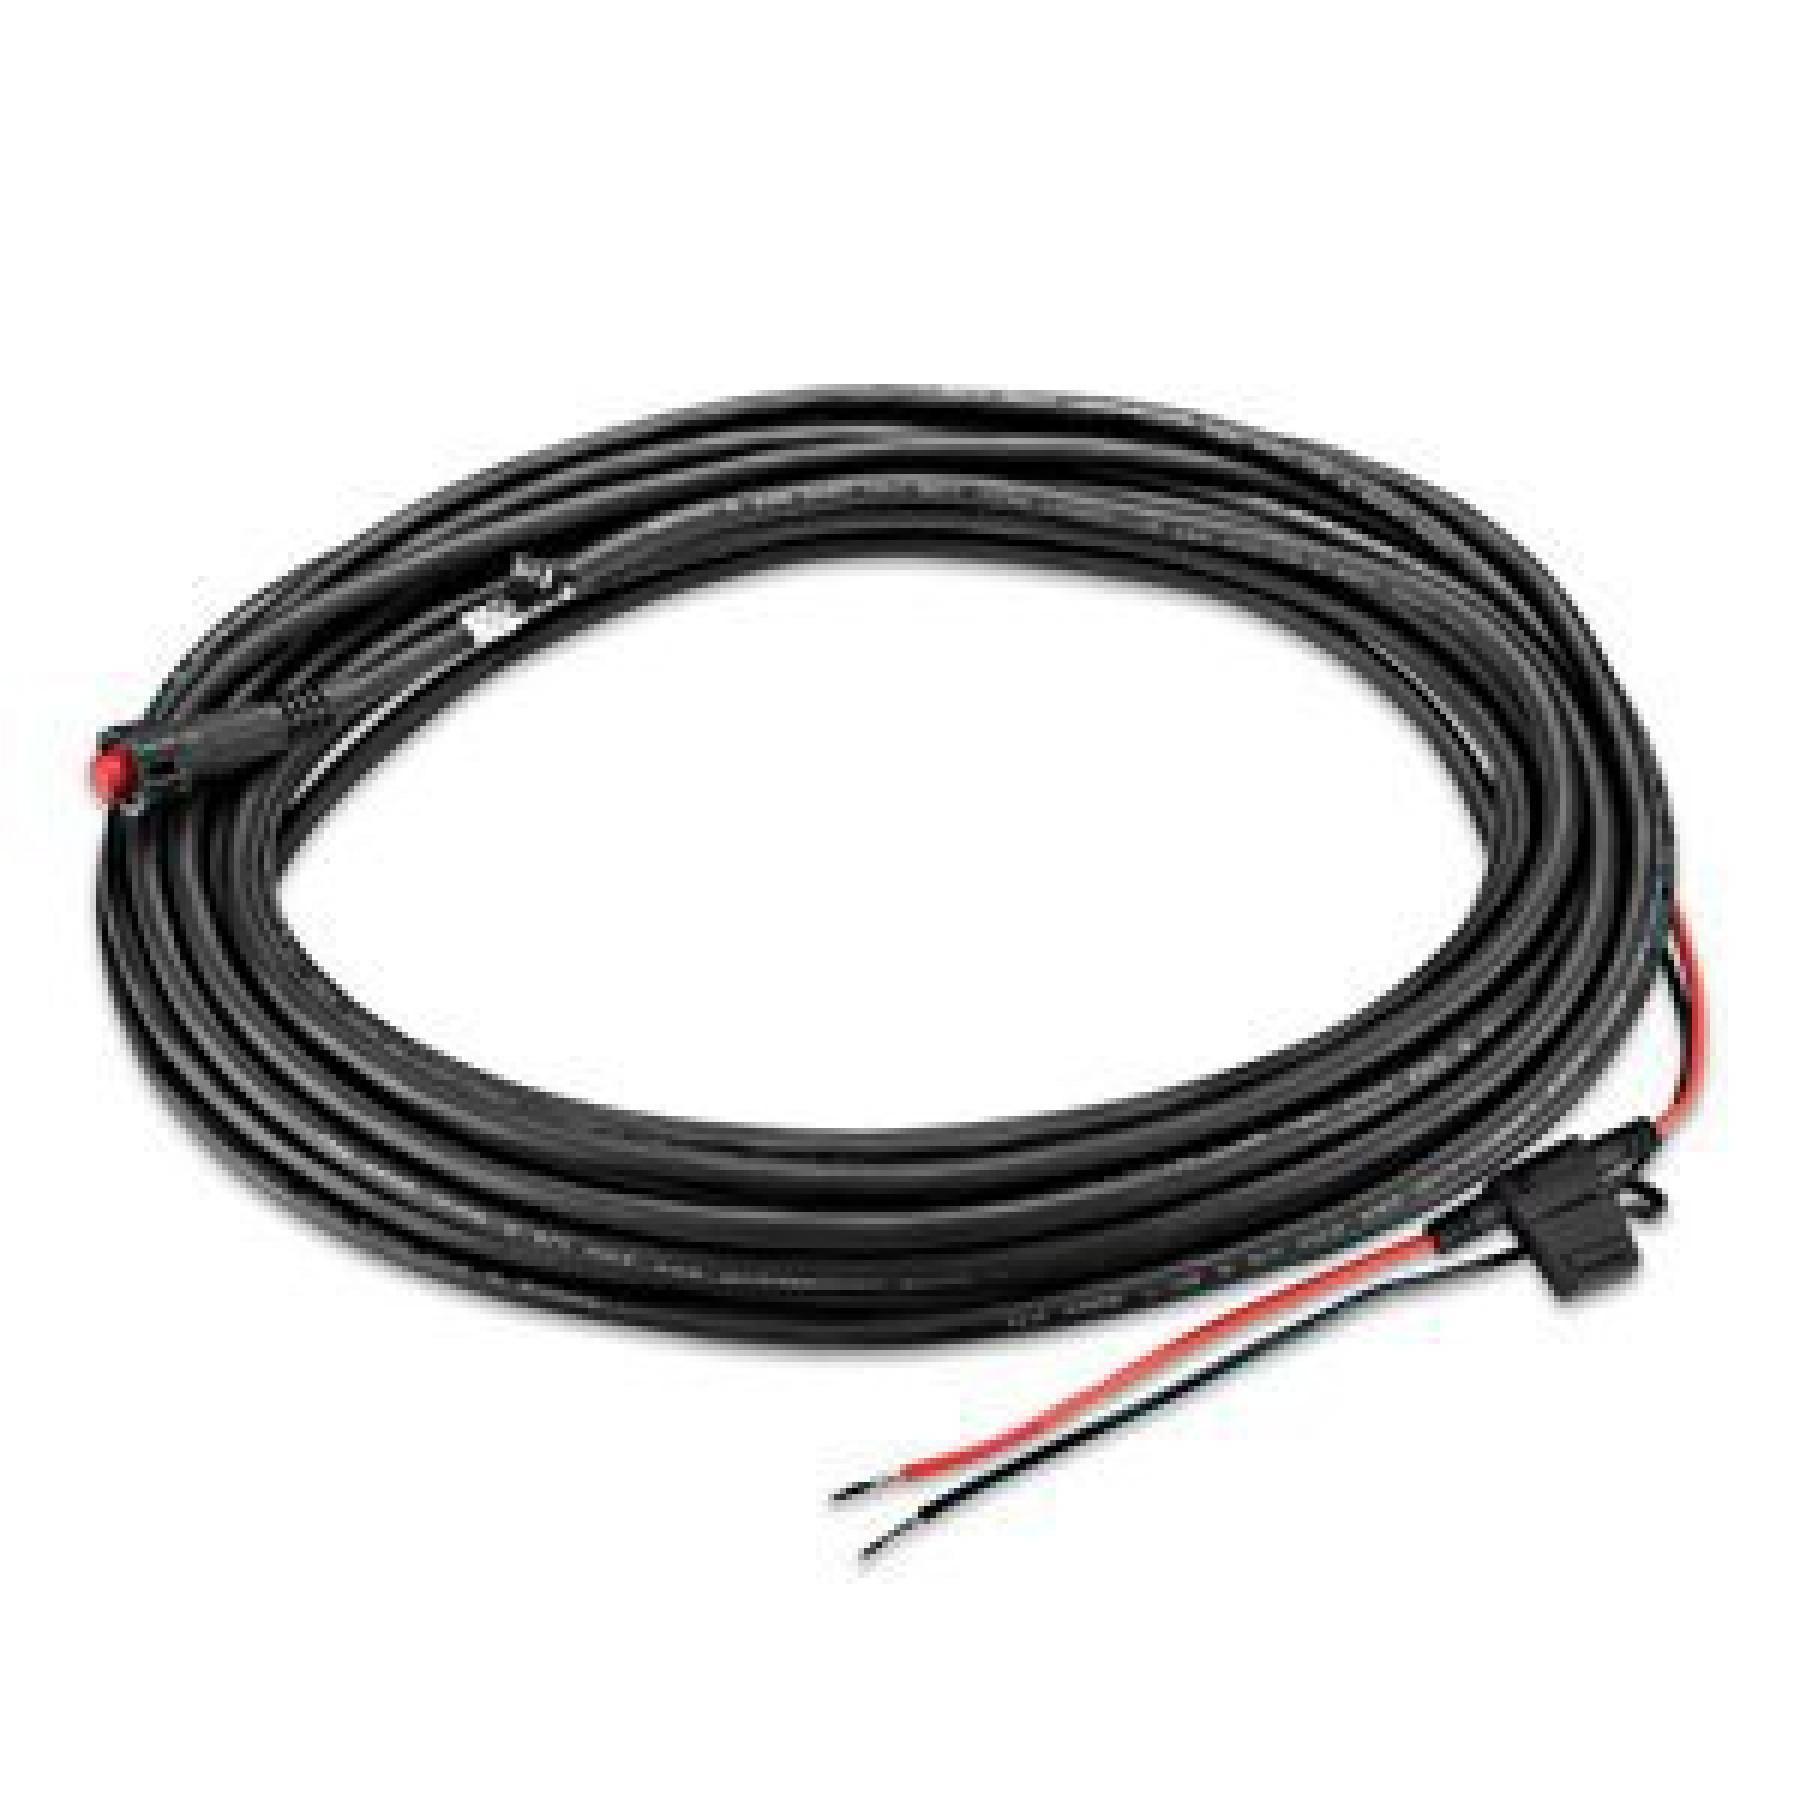 Kabel Garmin power cable